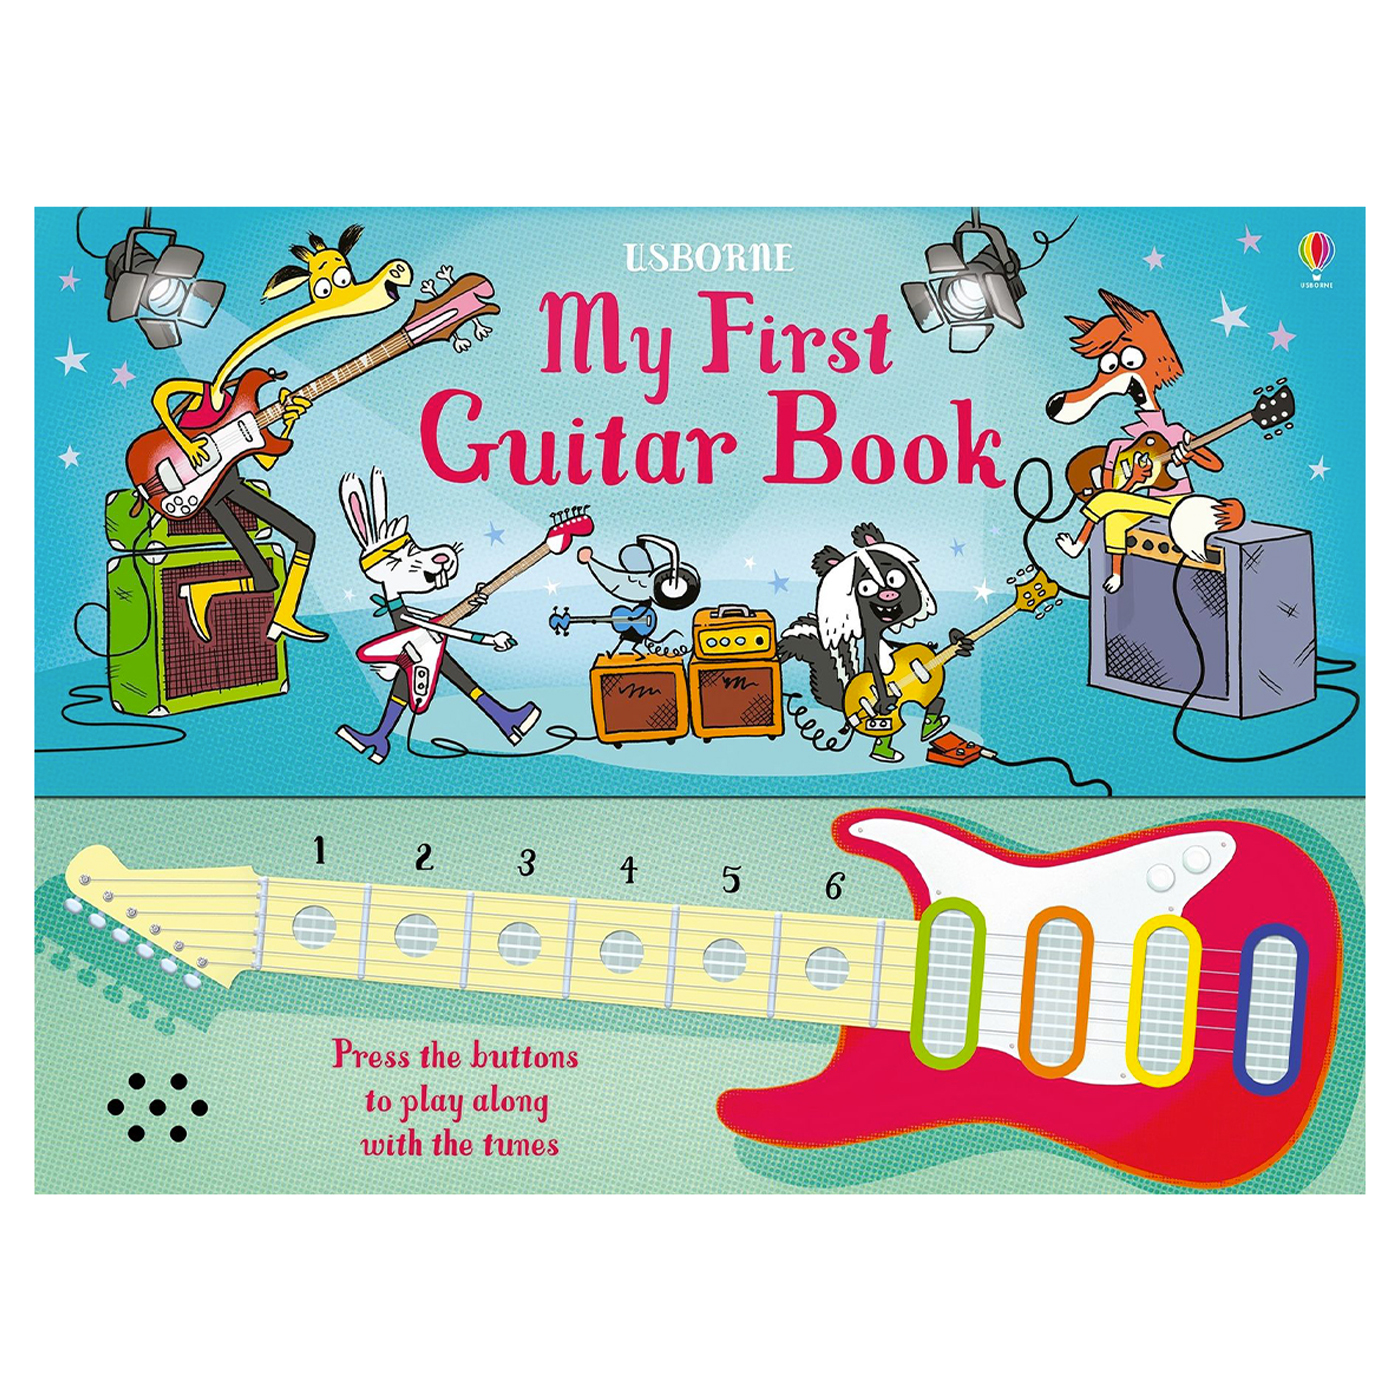  My First Guitar Book